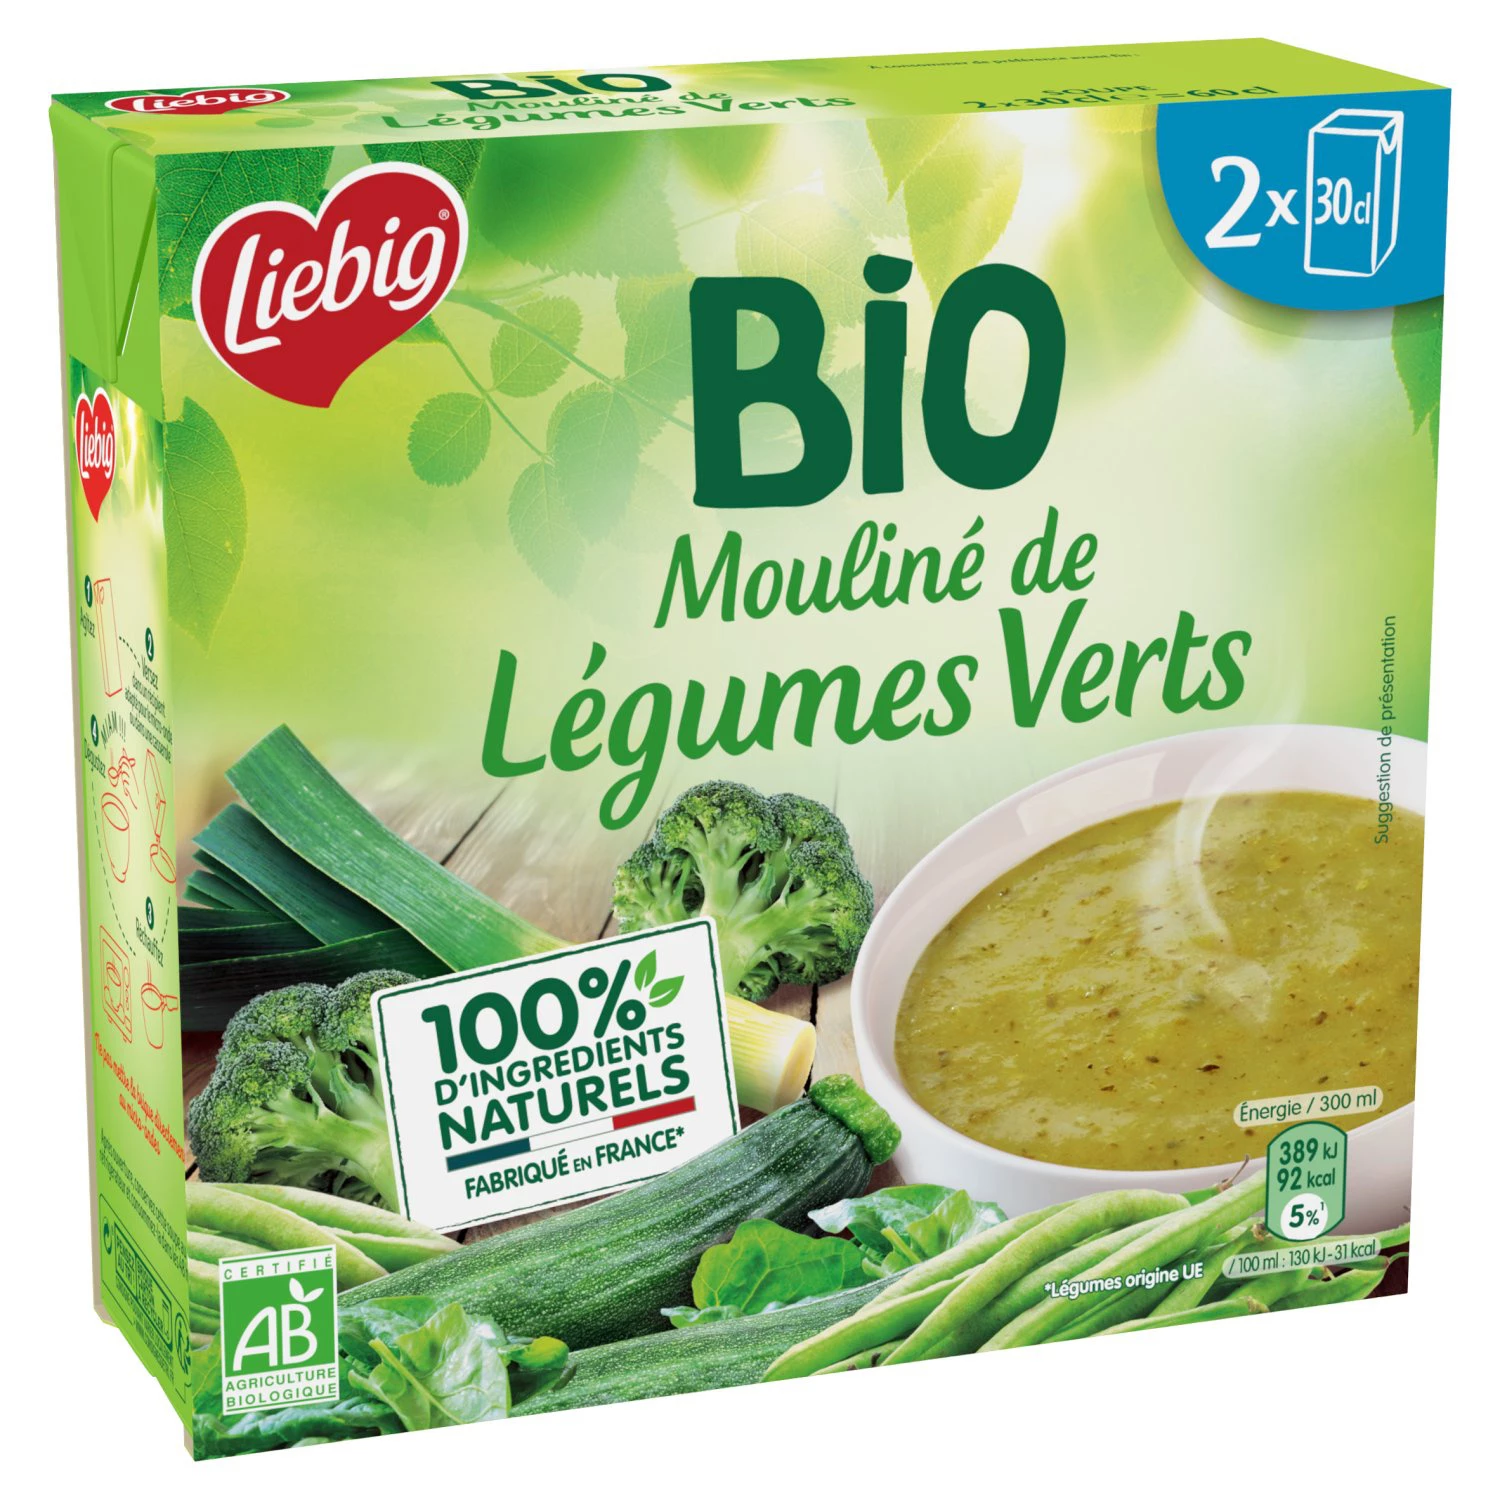 Organic Green Leg Mouline 2x30cl